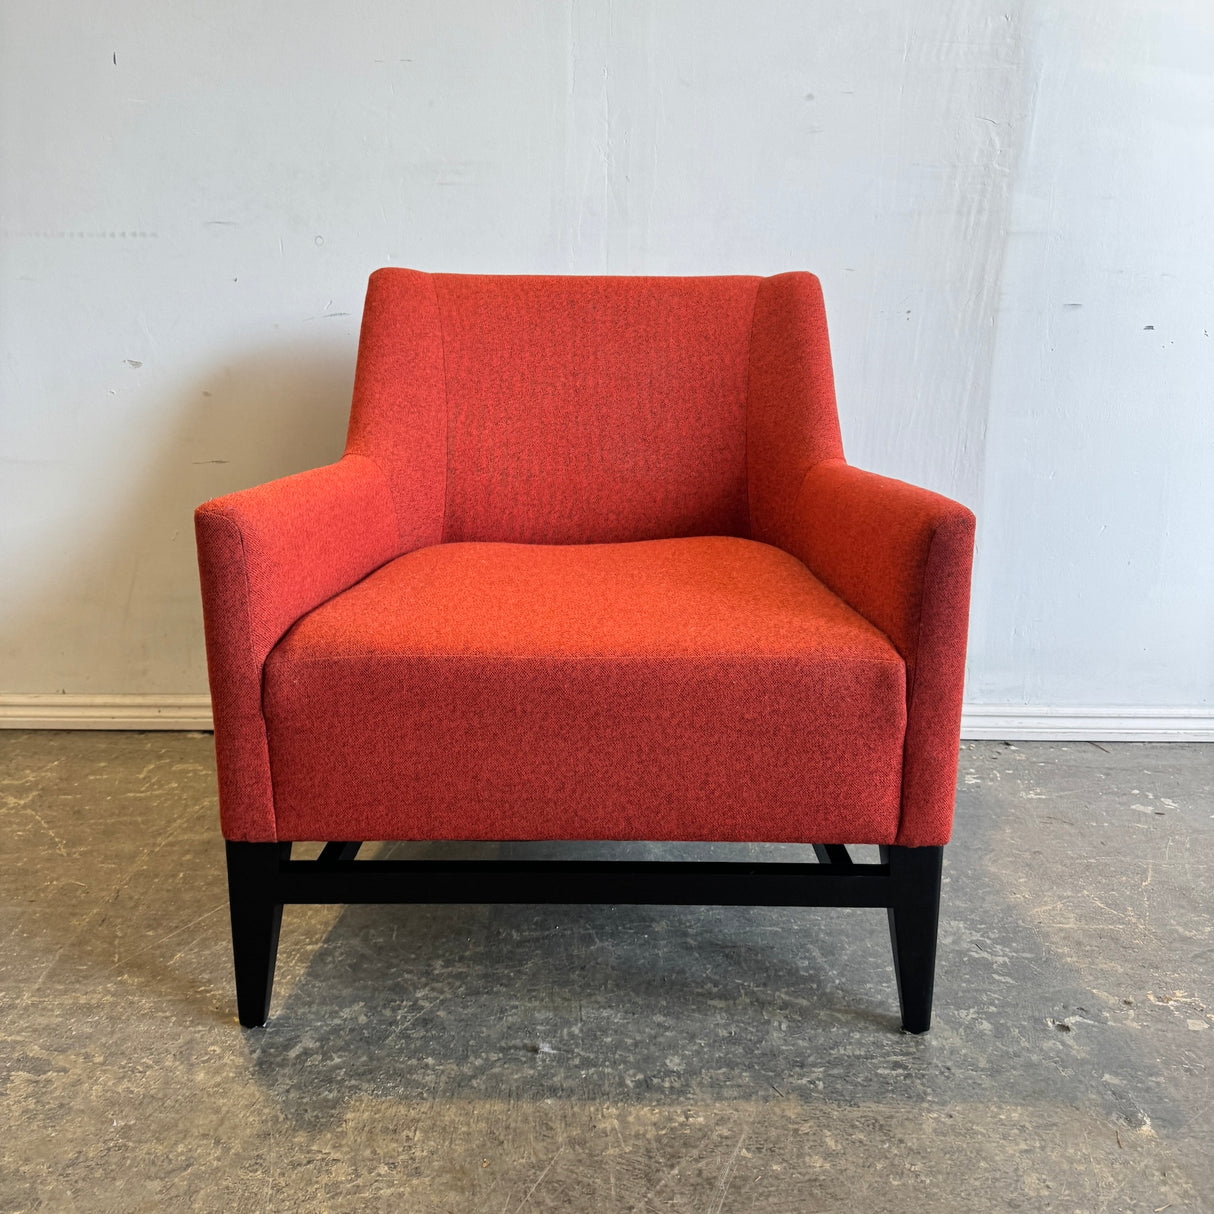 HBF Trestle Designer Lounge Chair